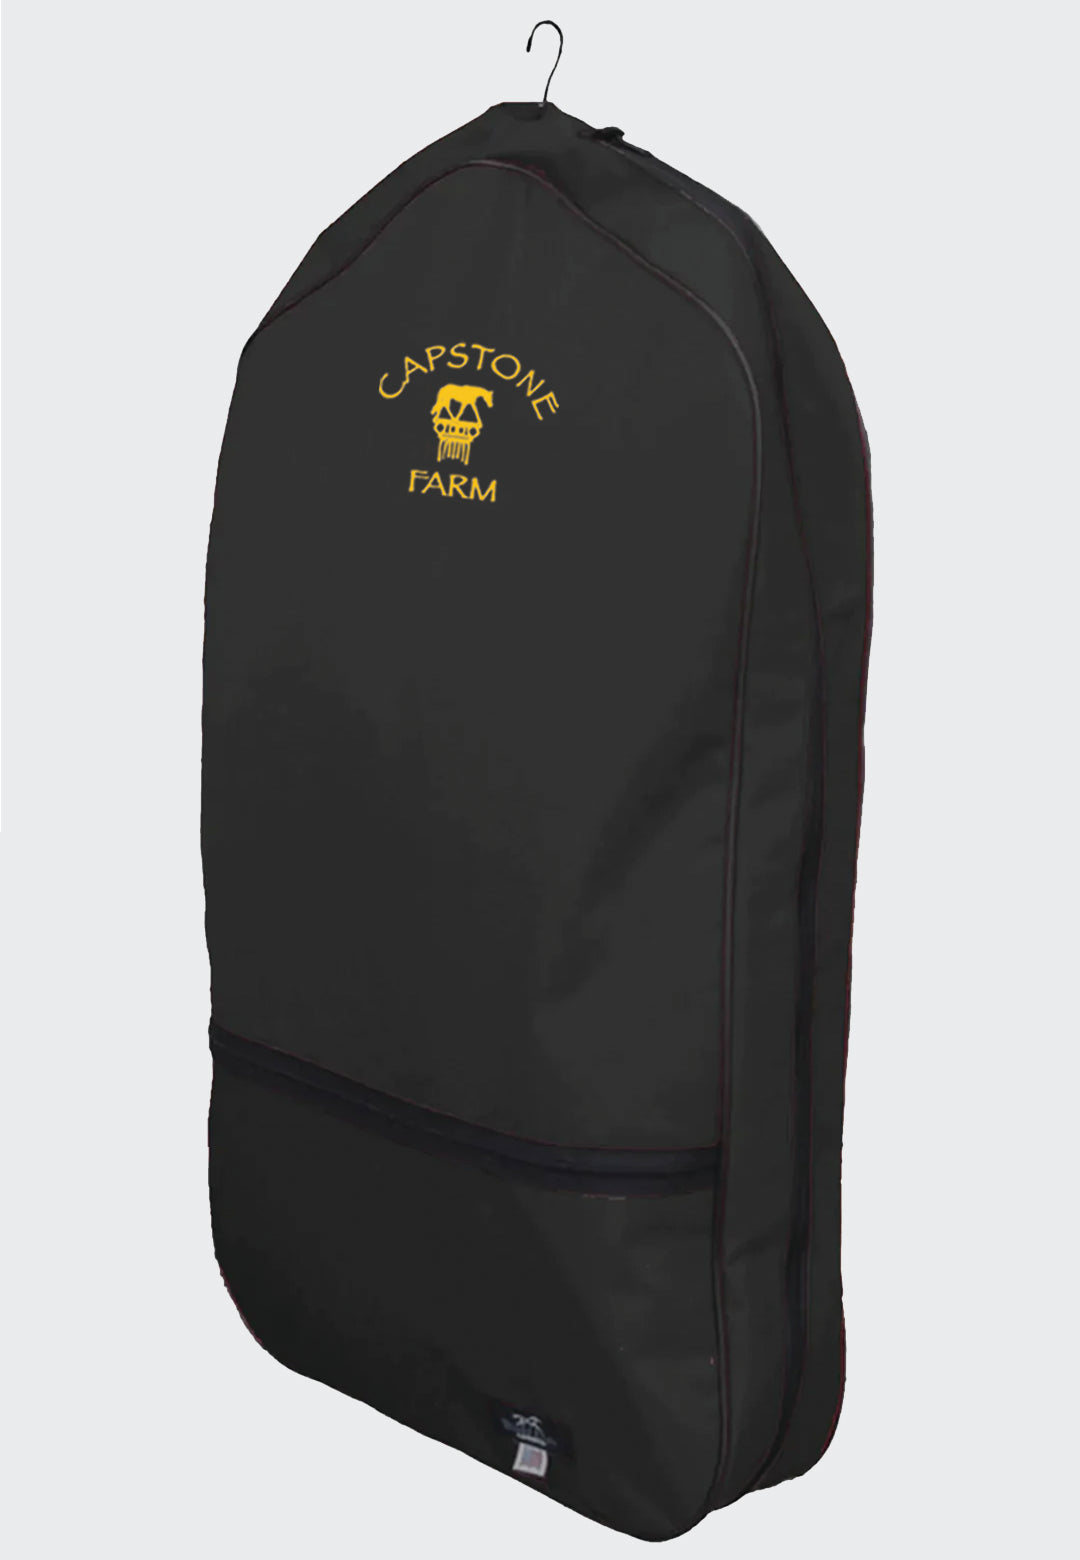 Capstone Farm World Class Equine Black Garment Bag - XL